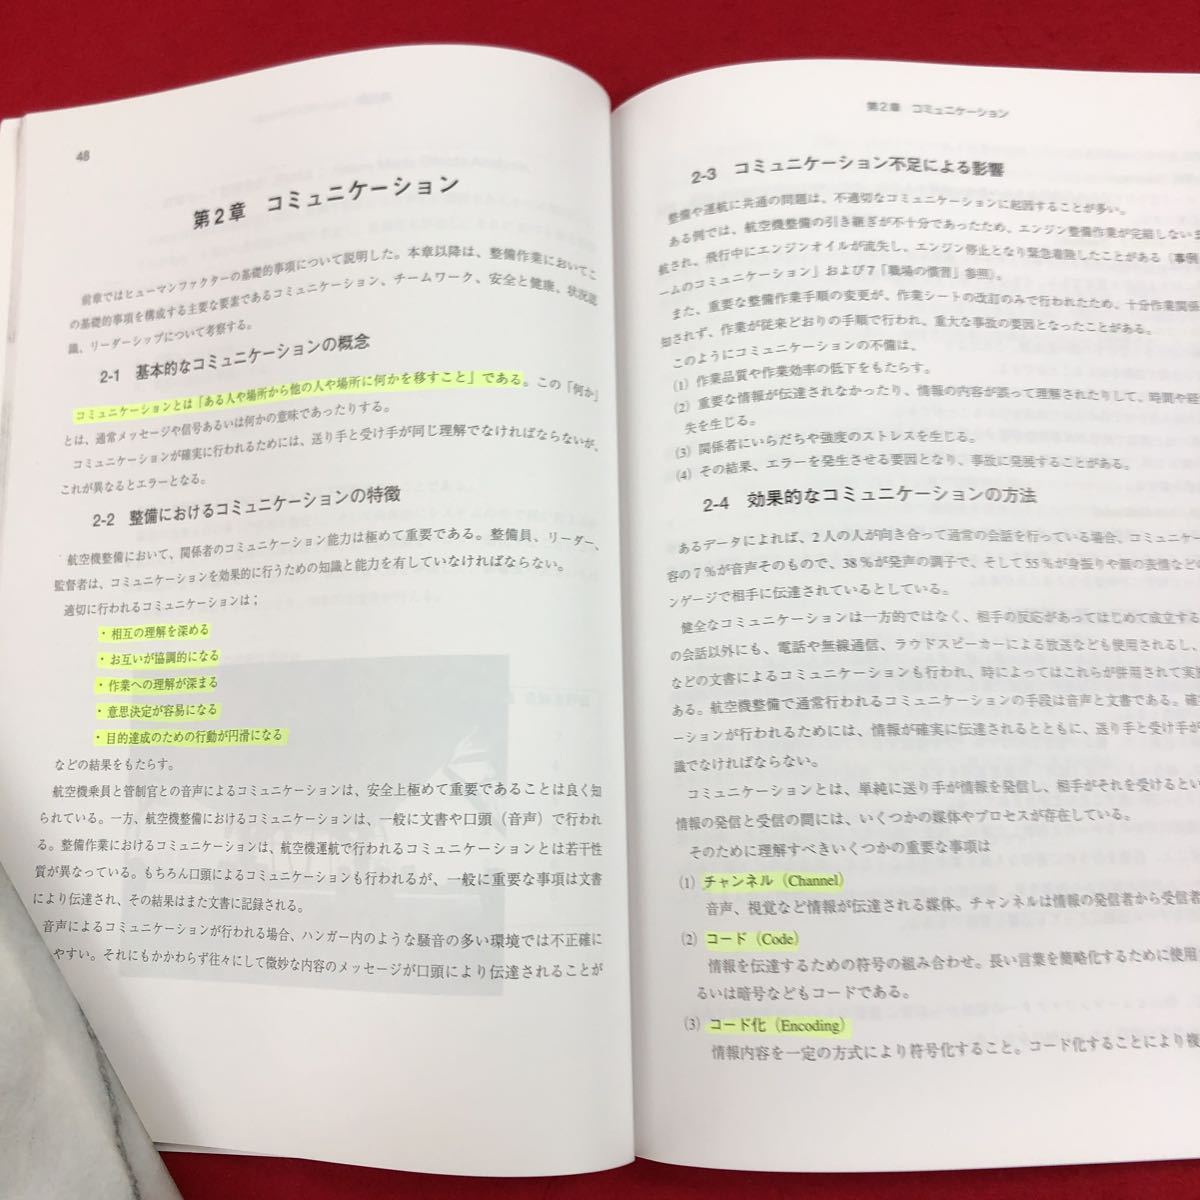 c-060 航空機整備 ヒューマンファクターの基礎 日本航空技術協会 編・発行 2018年3月31日第2版第5刷発行 飛行機 航空 安全管理法 ※6 _数ページに書き込みあり